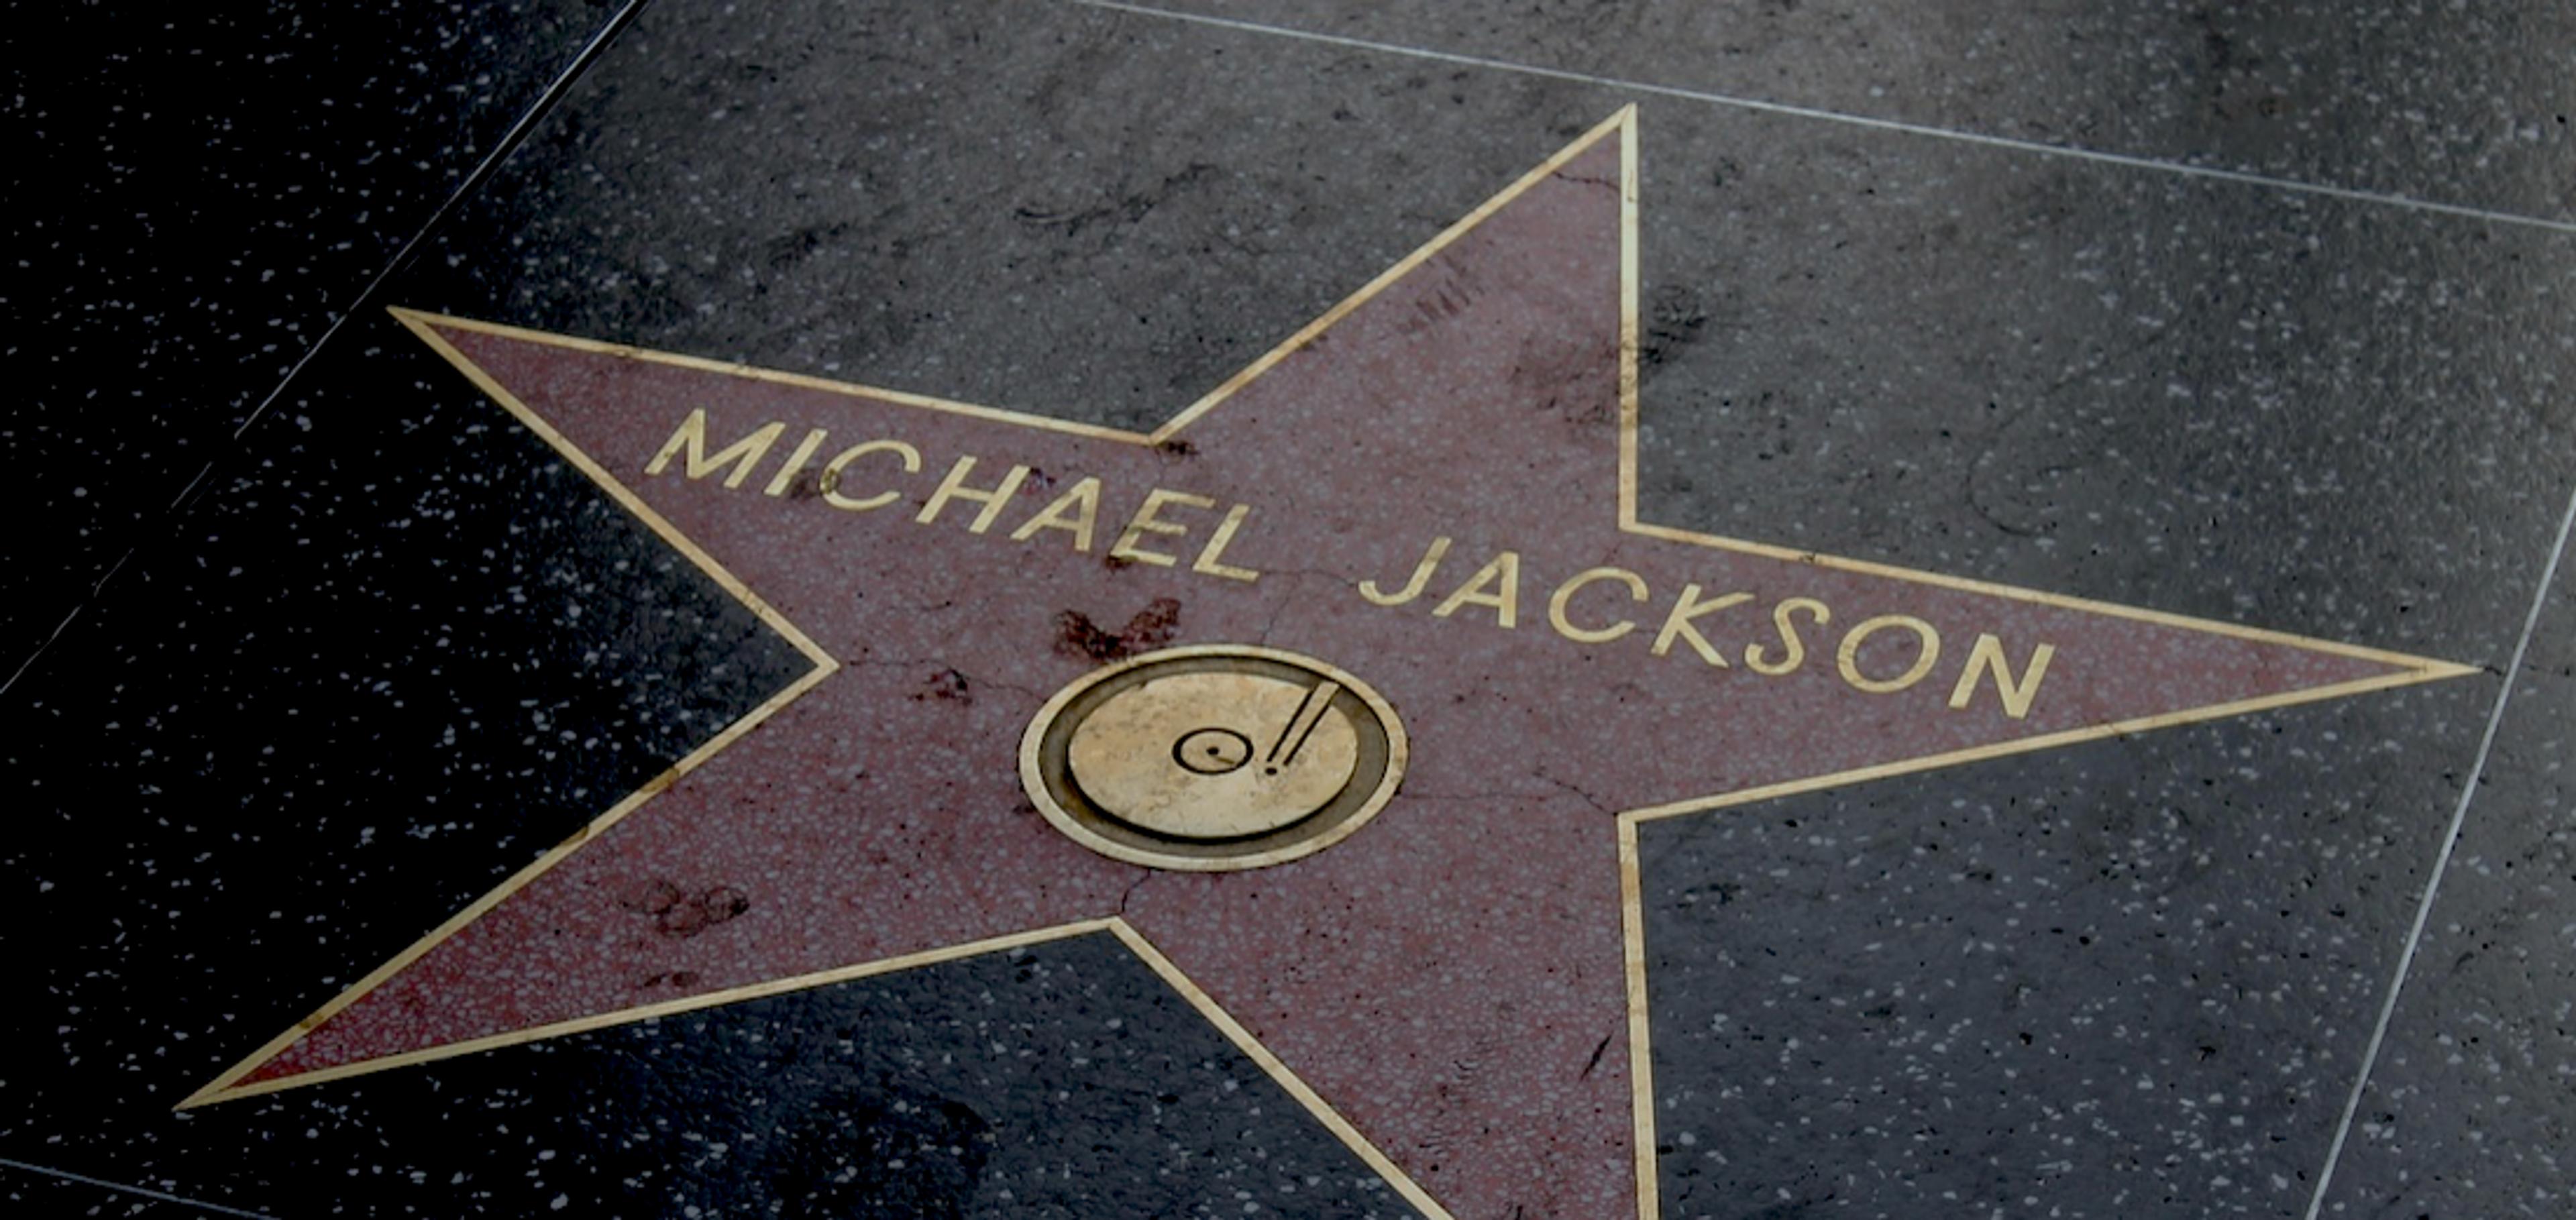 The Michael Jackson Songbook